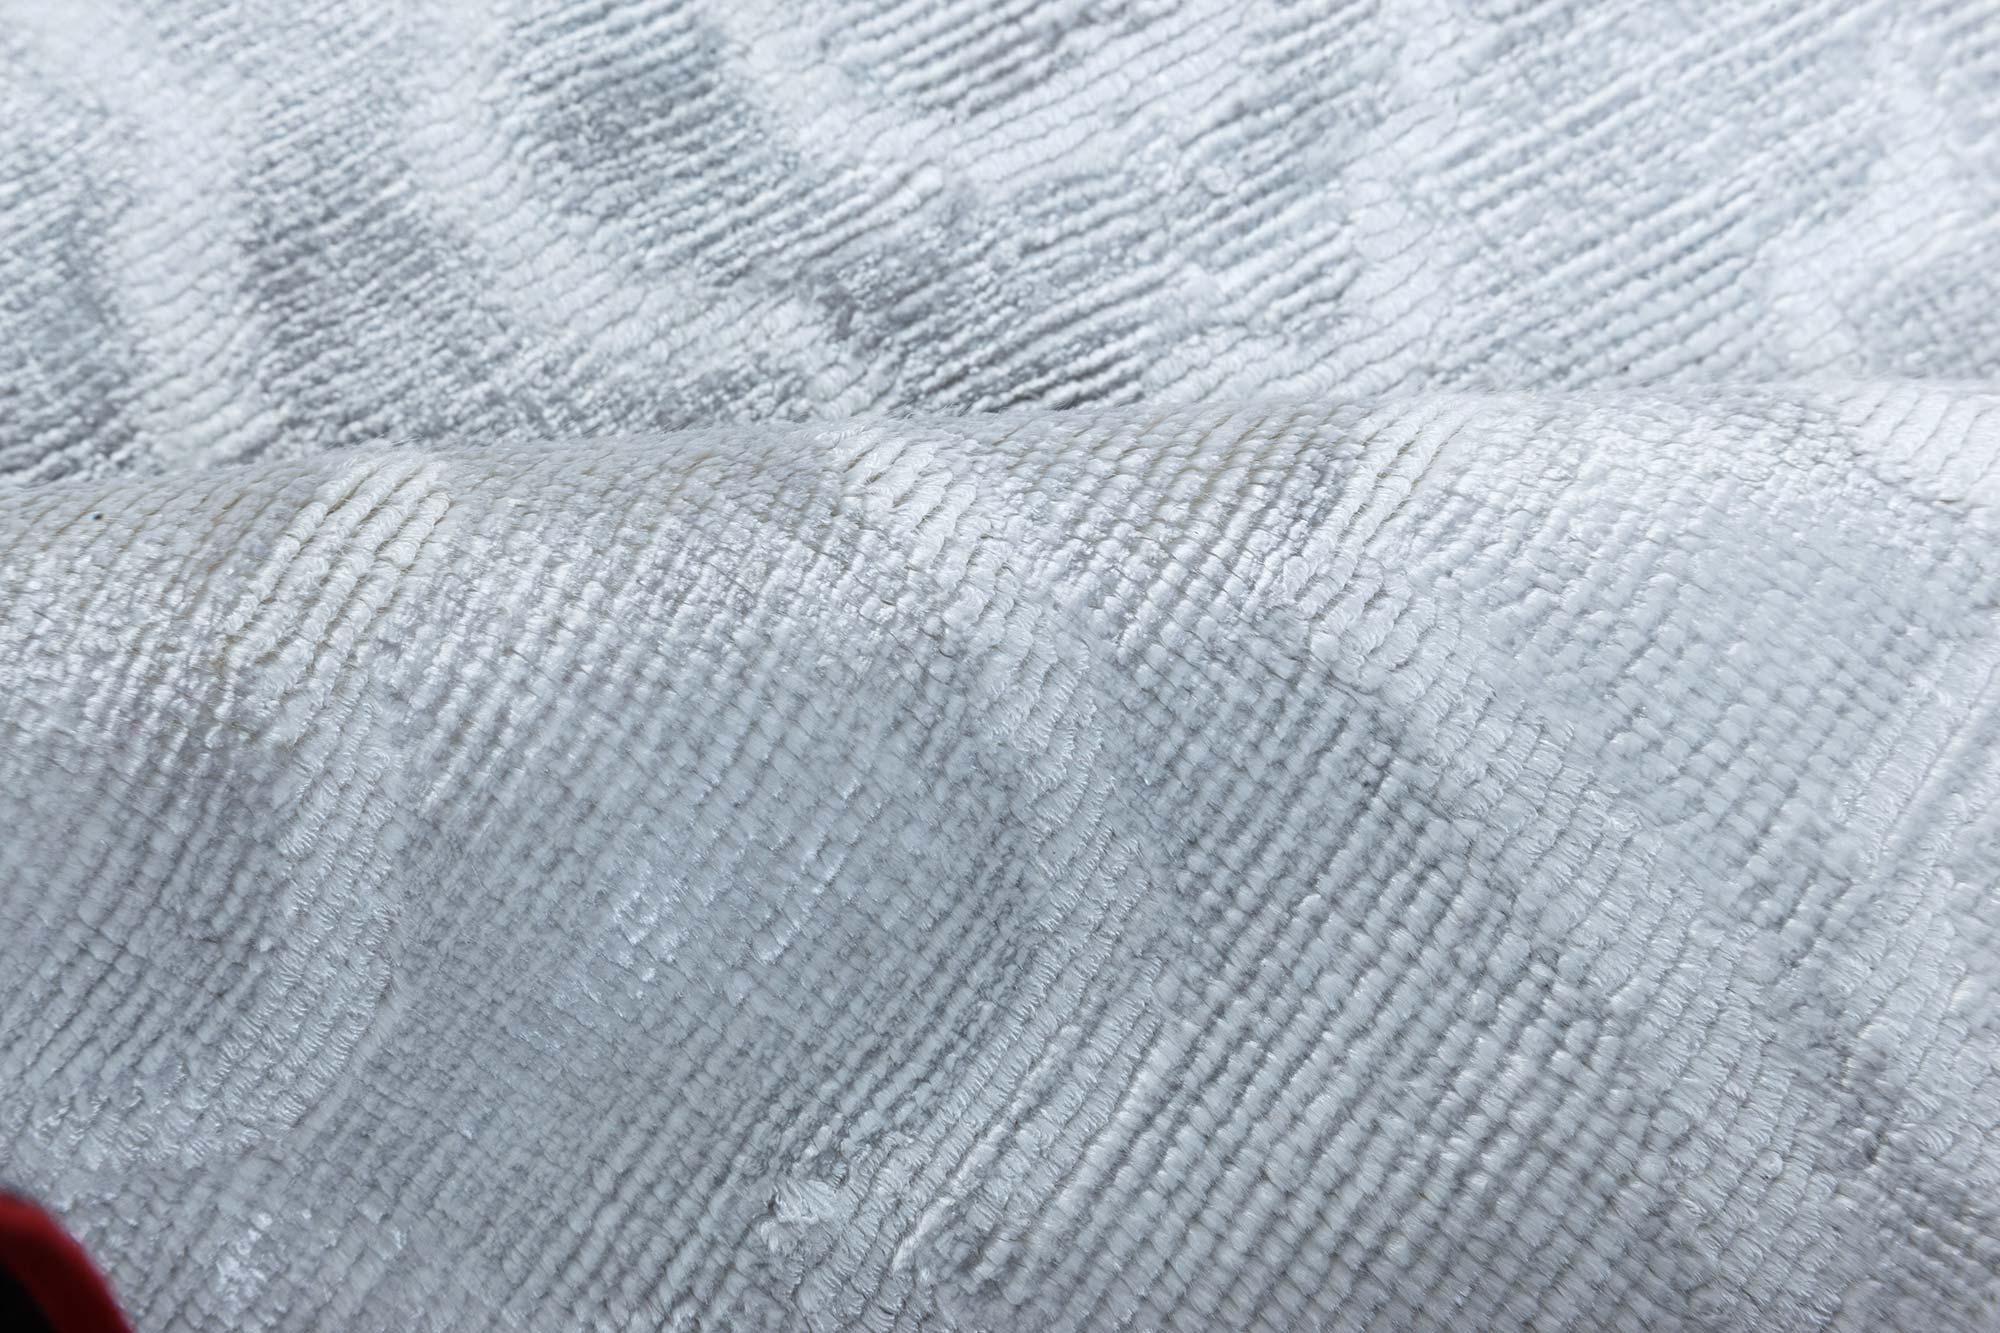 Doris Leslie Blau collection handmade Camellia rug in white silk.
Size: 10'10